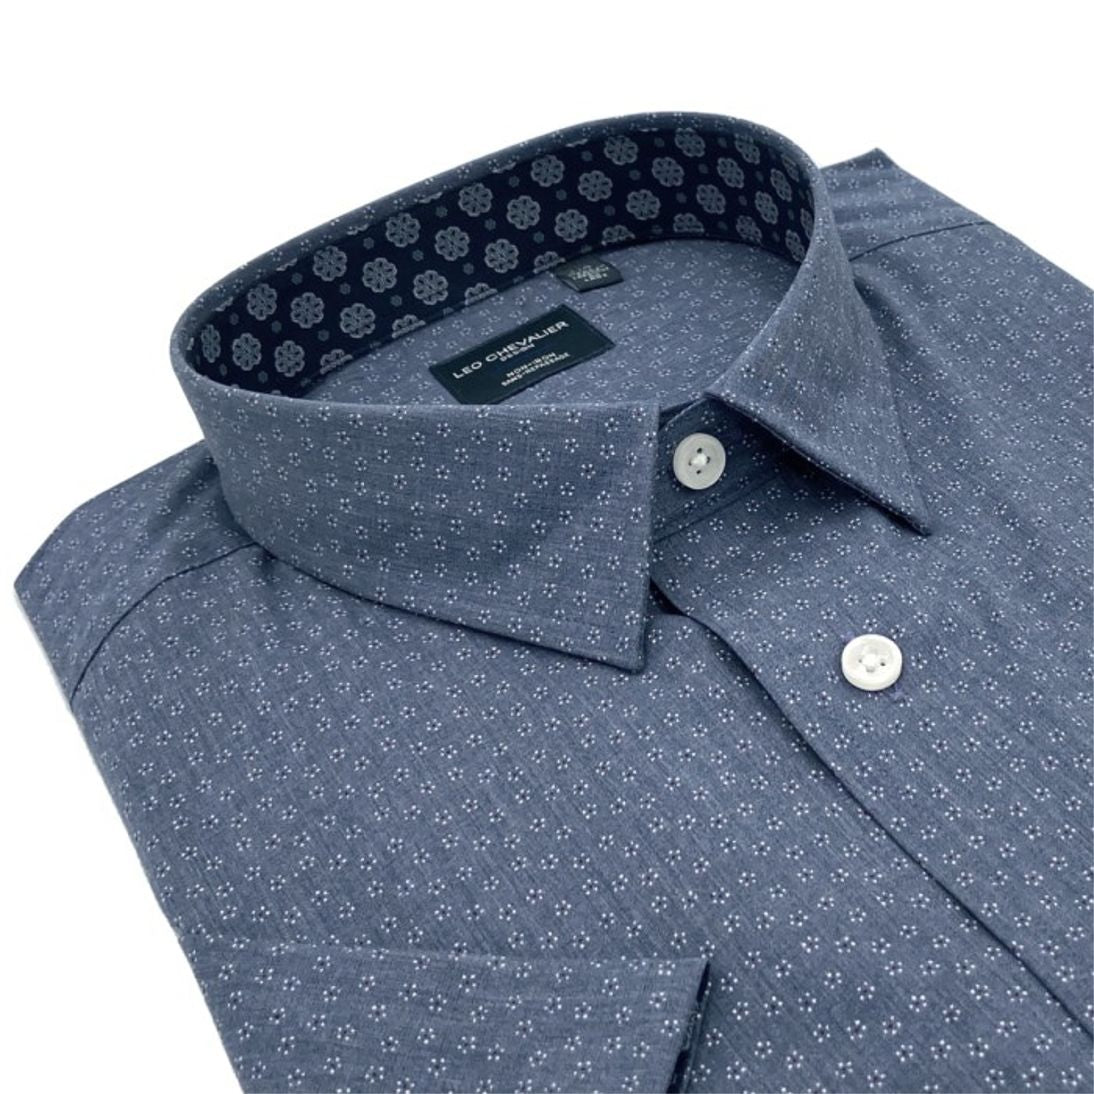 Grey Neat Print Short Sleeve No-Iron Cotton Sport Shirt with Hidden Button Down Collar by Leo Chevalier